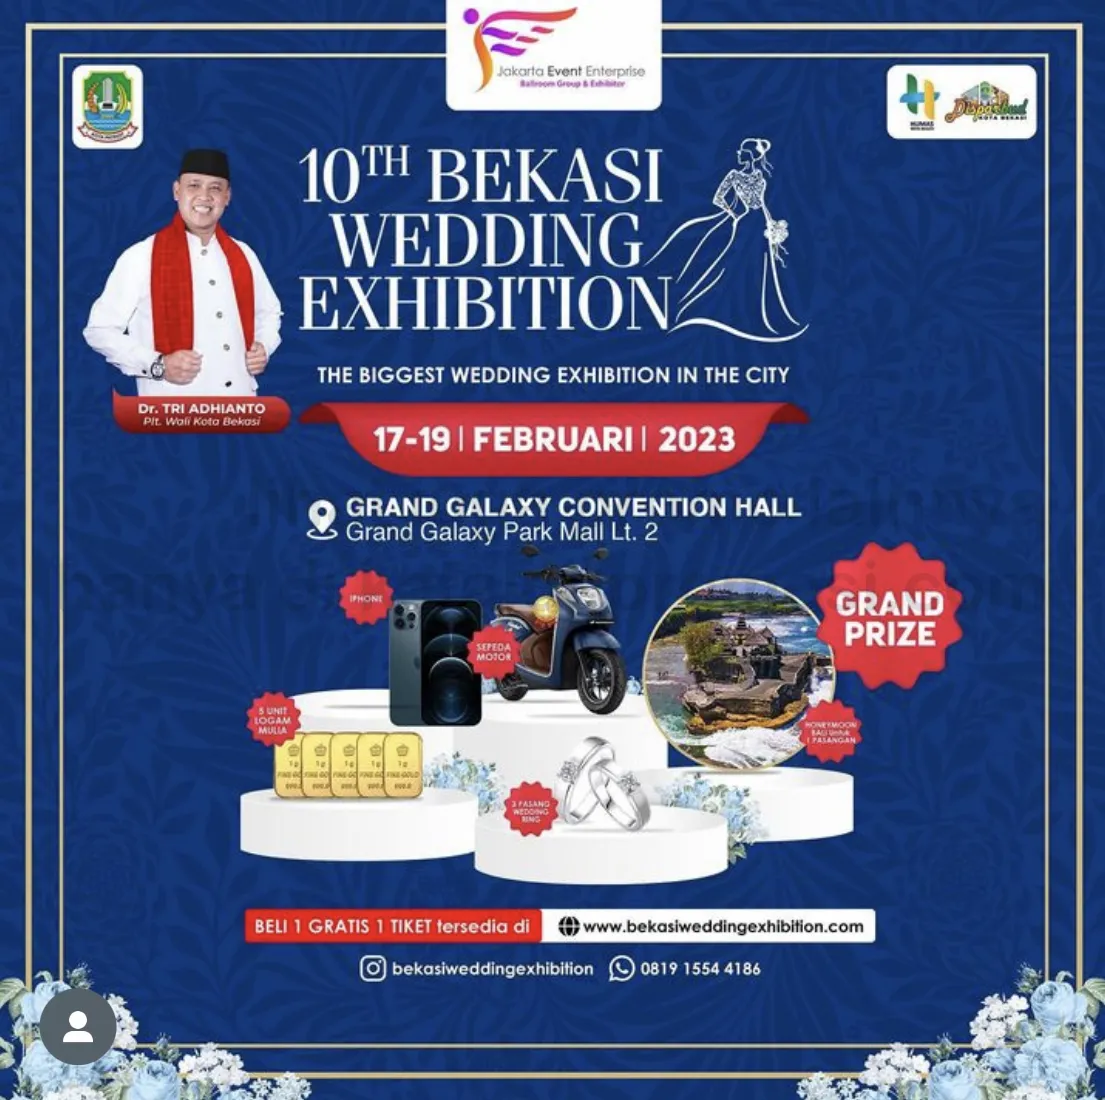 Bekasi Wedding Exhibition ke-10 di Grand Galaxy Convention Hall